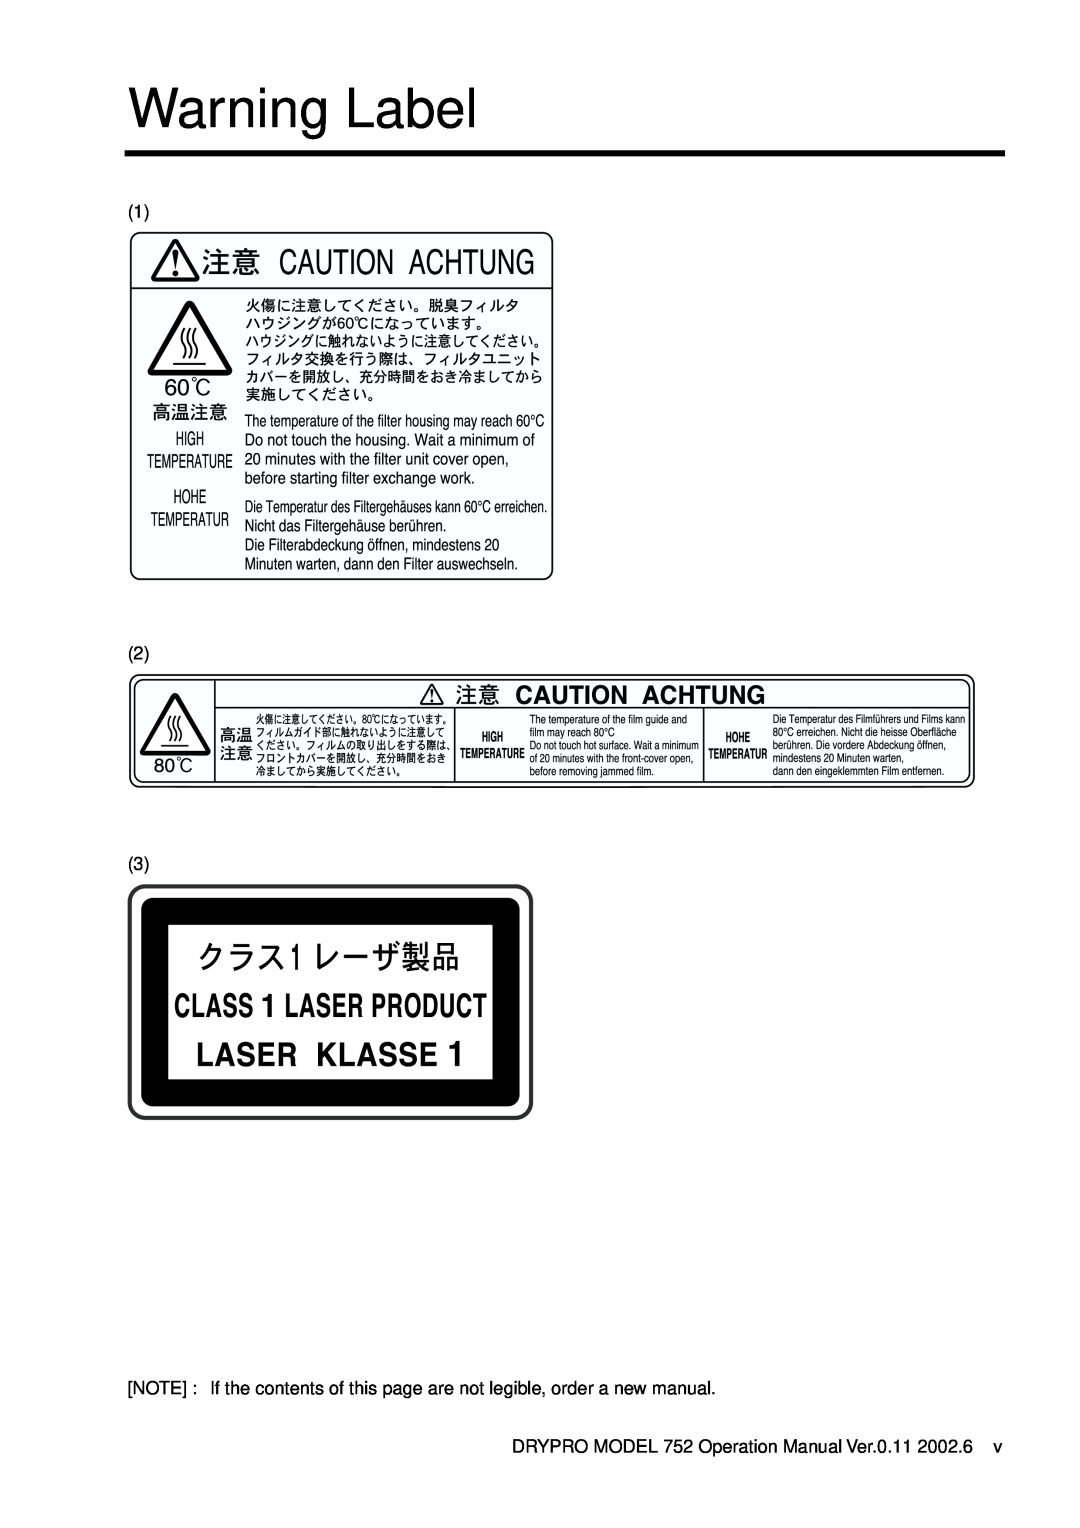 Konica Minolta 752 operation manual Warning Label 